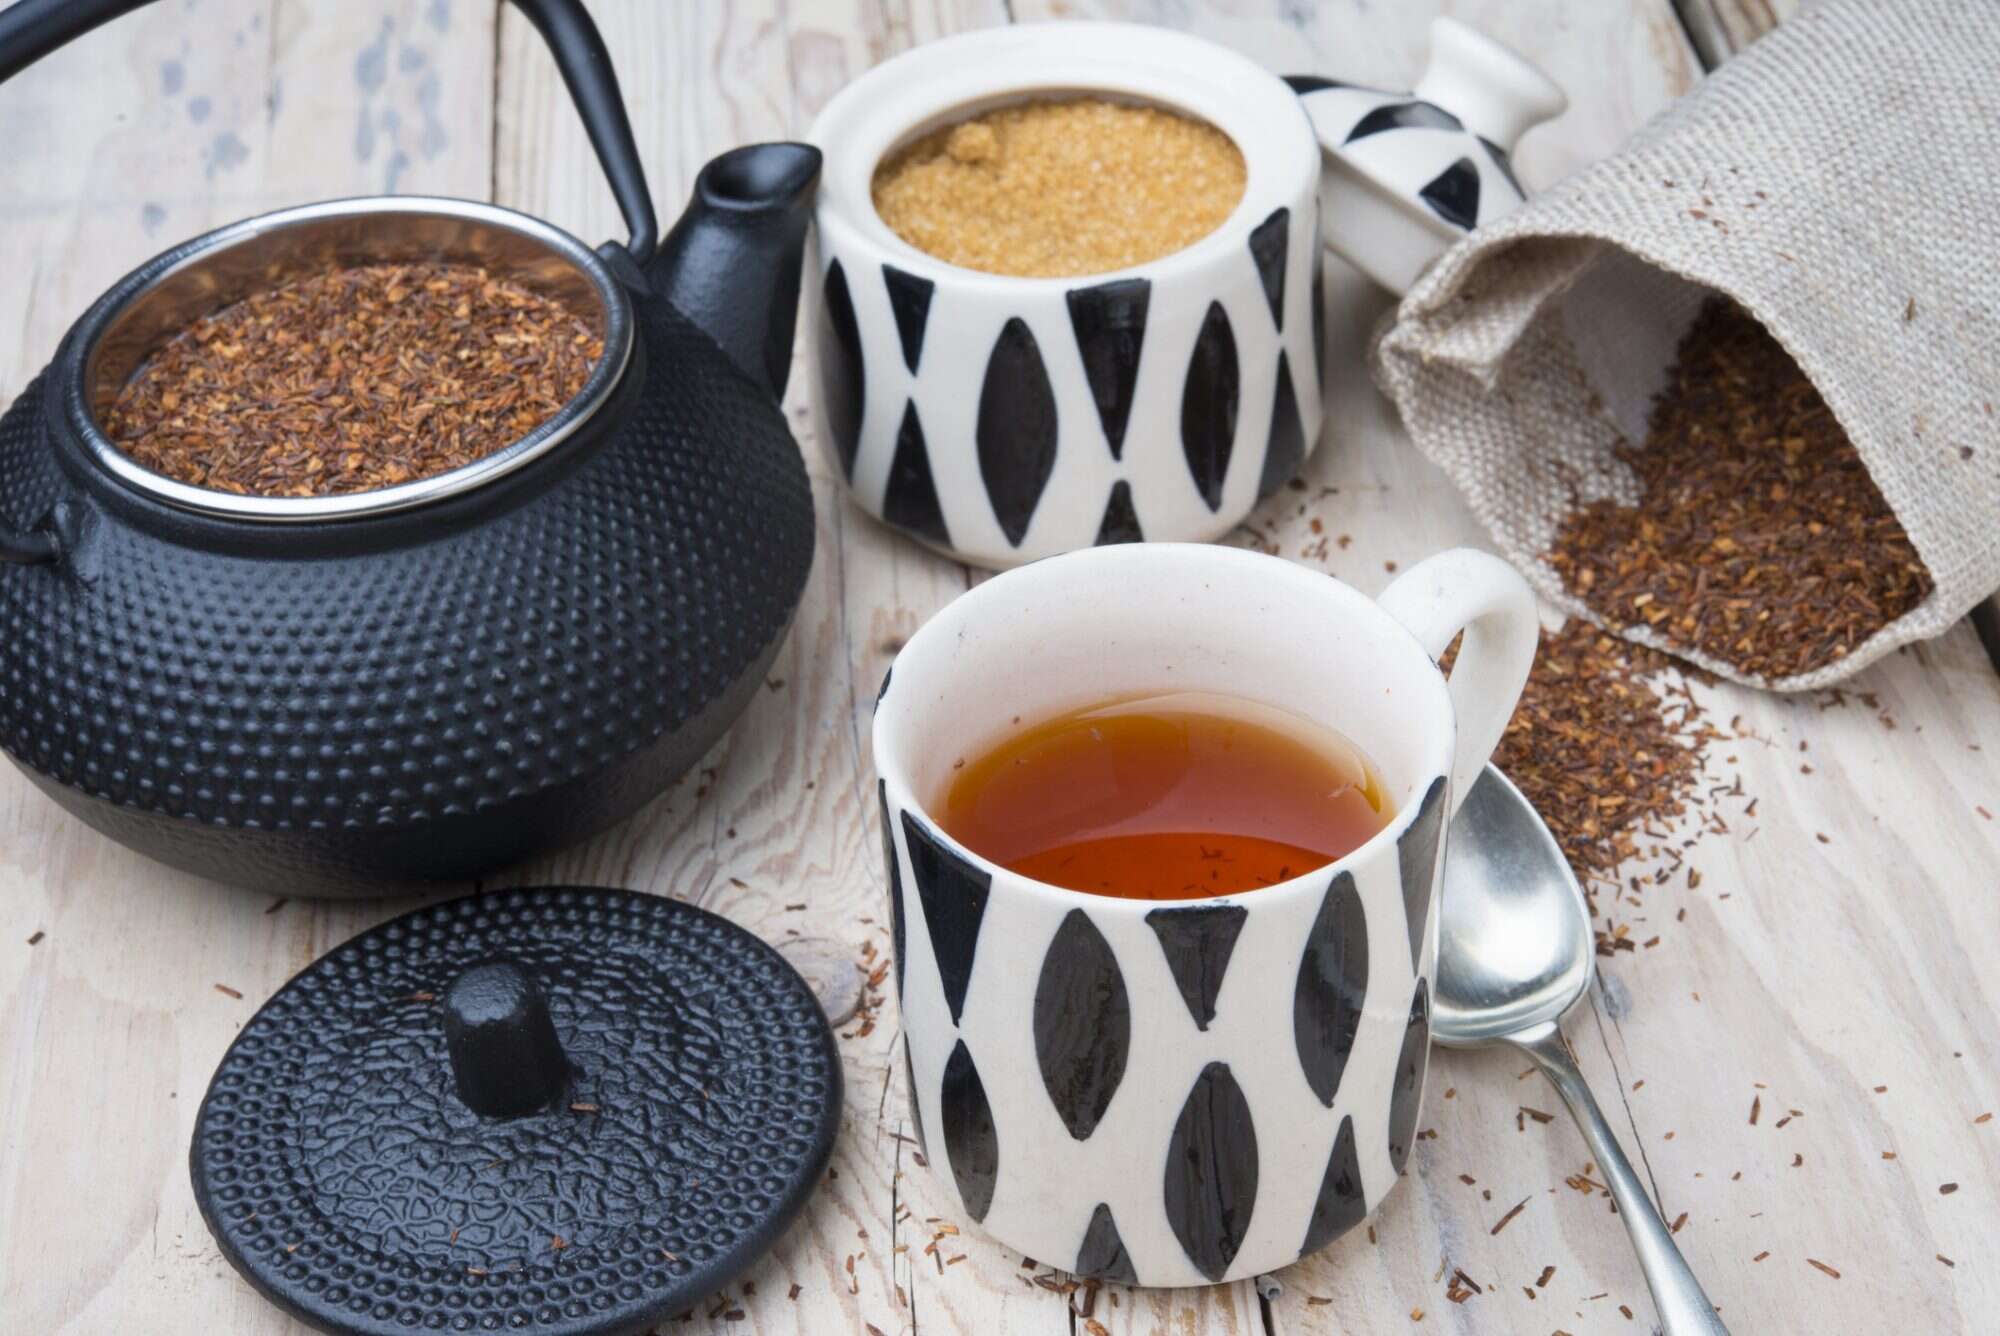 Top 5 health benefits of rooibos tea